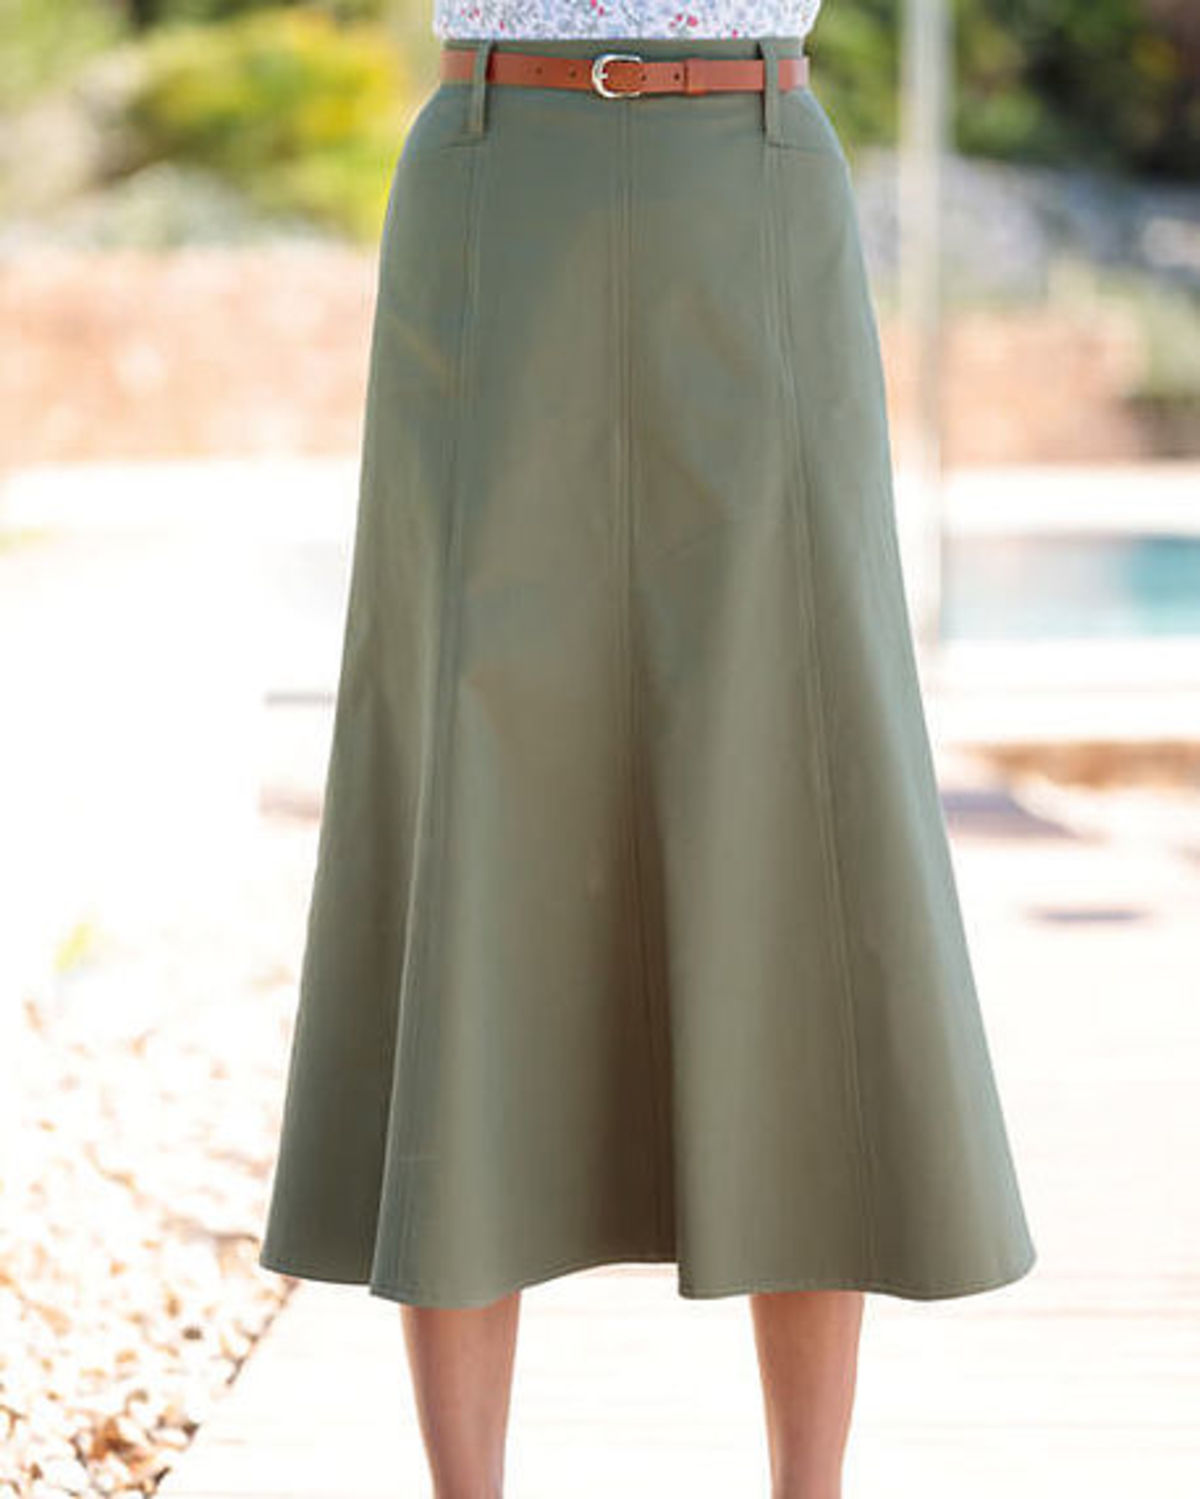 Pure cotton twill ladies skirt. Machine washable. Sizes 10-24.